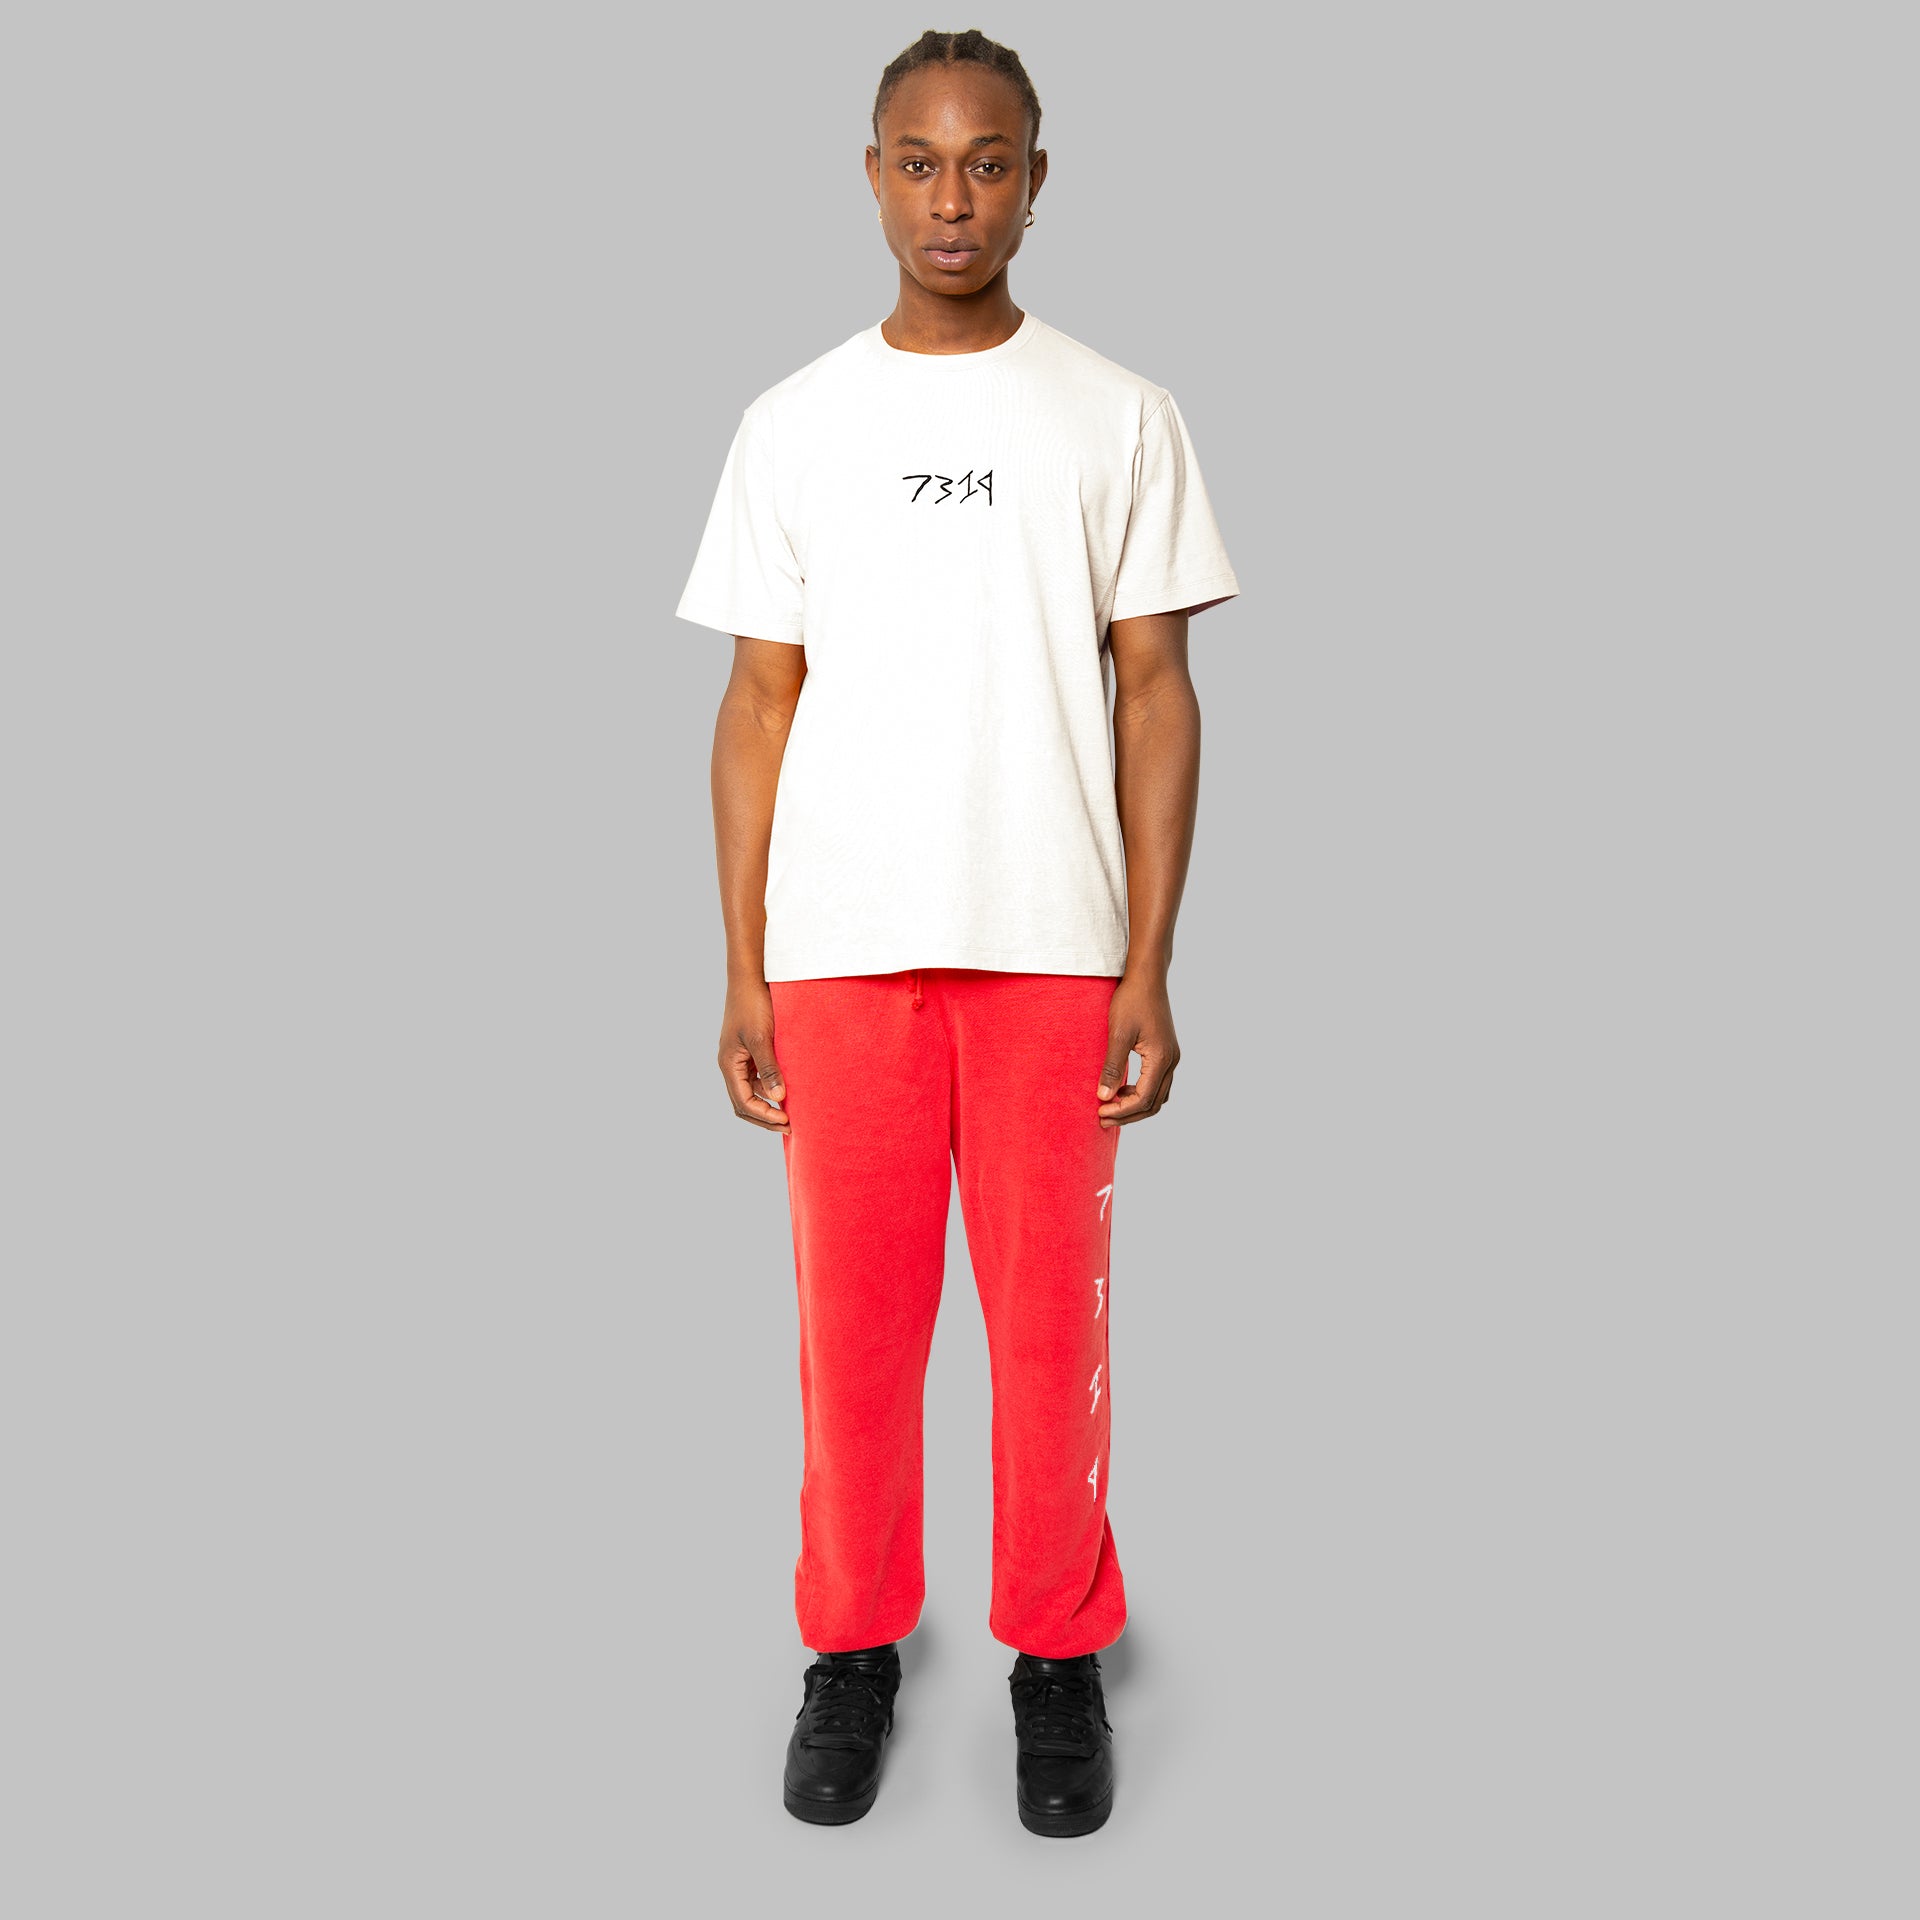 Complete set, white hemp t-shirt and red hemp sweatpants. Red hem joggers white 7319 logo embroidered down leg. White hemp t-shirt with black 7319 logo across front.